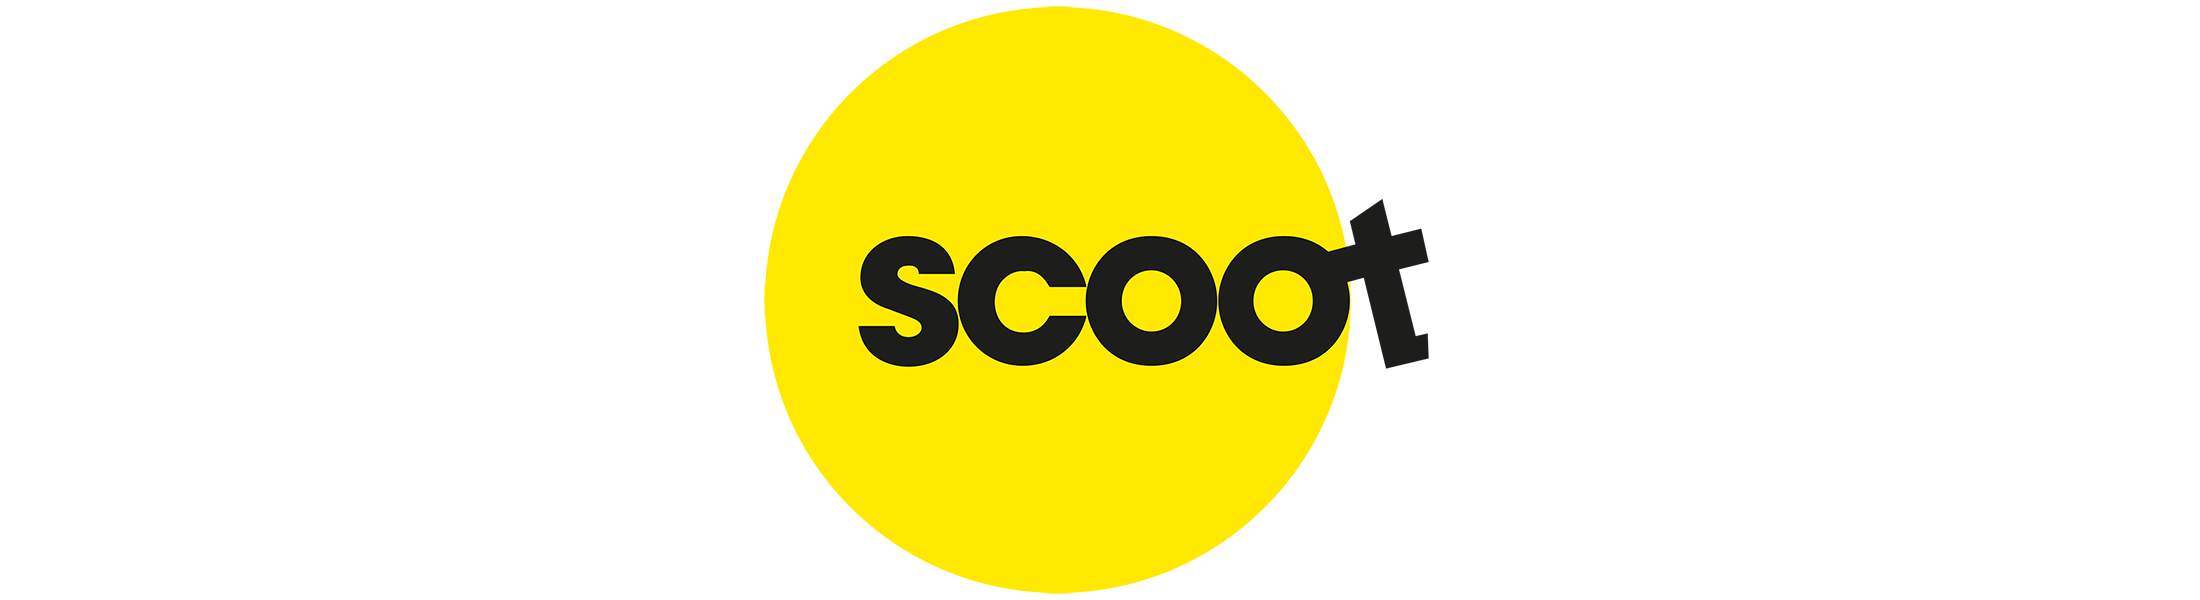 Scoot / Tigerair